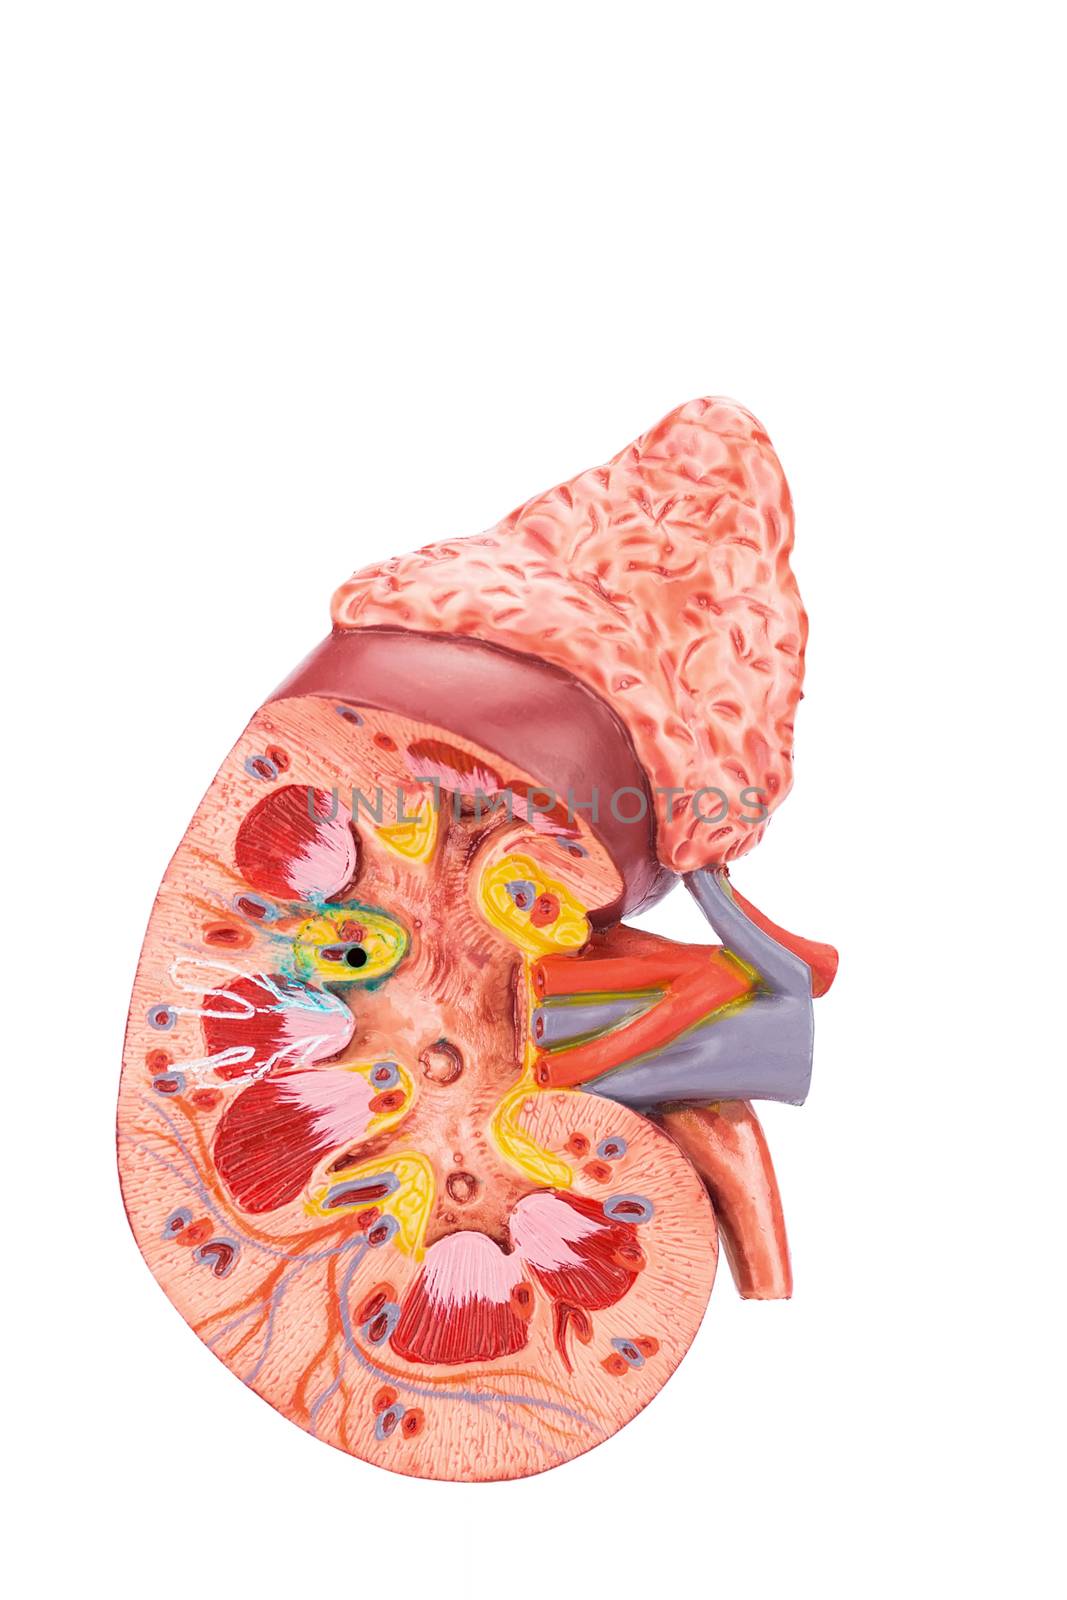 Model human kidney cross section inside by BenSchonewille